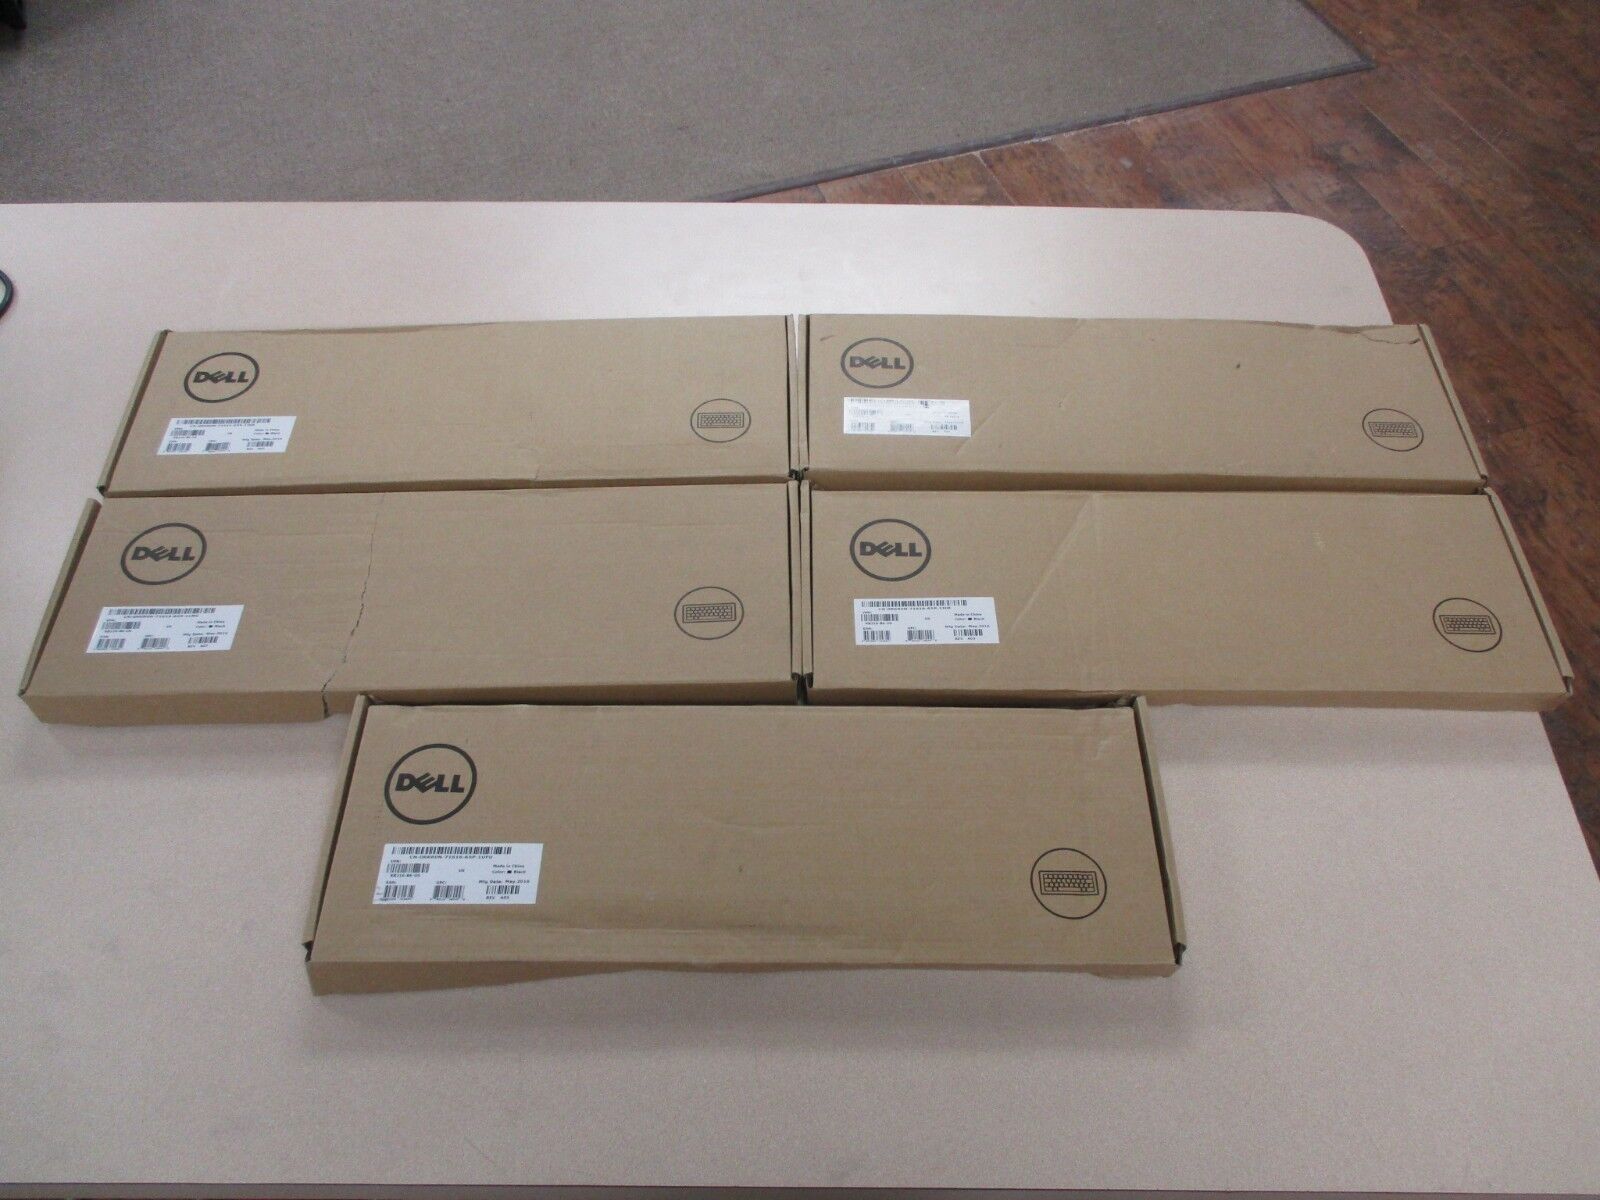 Lot of 5 NEW Dell Keyboard KB216 USB 104 **DISTRESSED BOX SEE PICS/ DESCRIPTION*